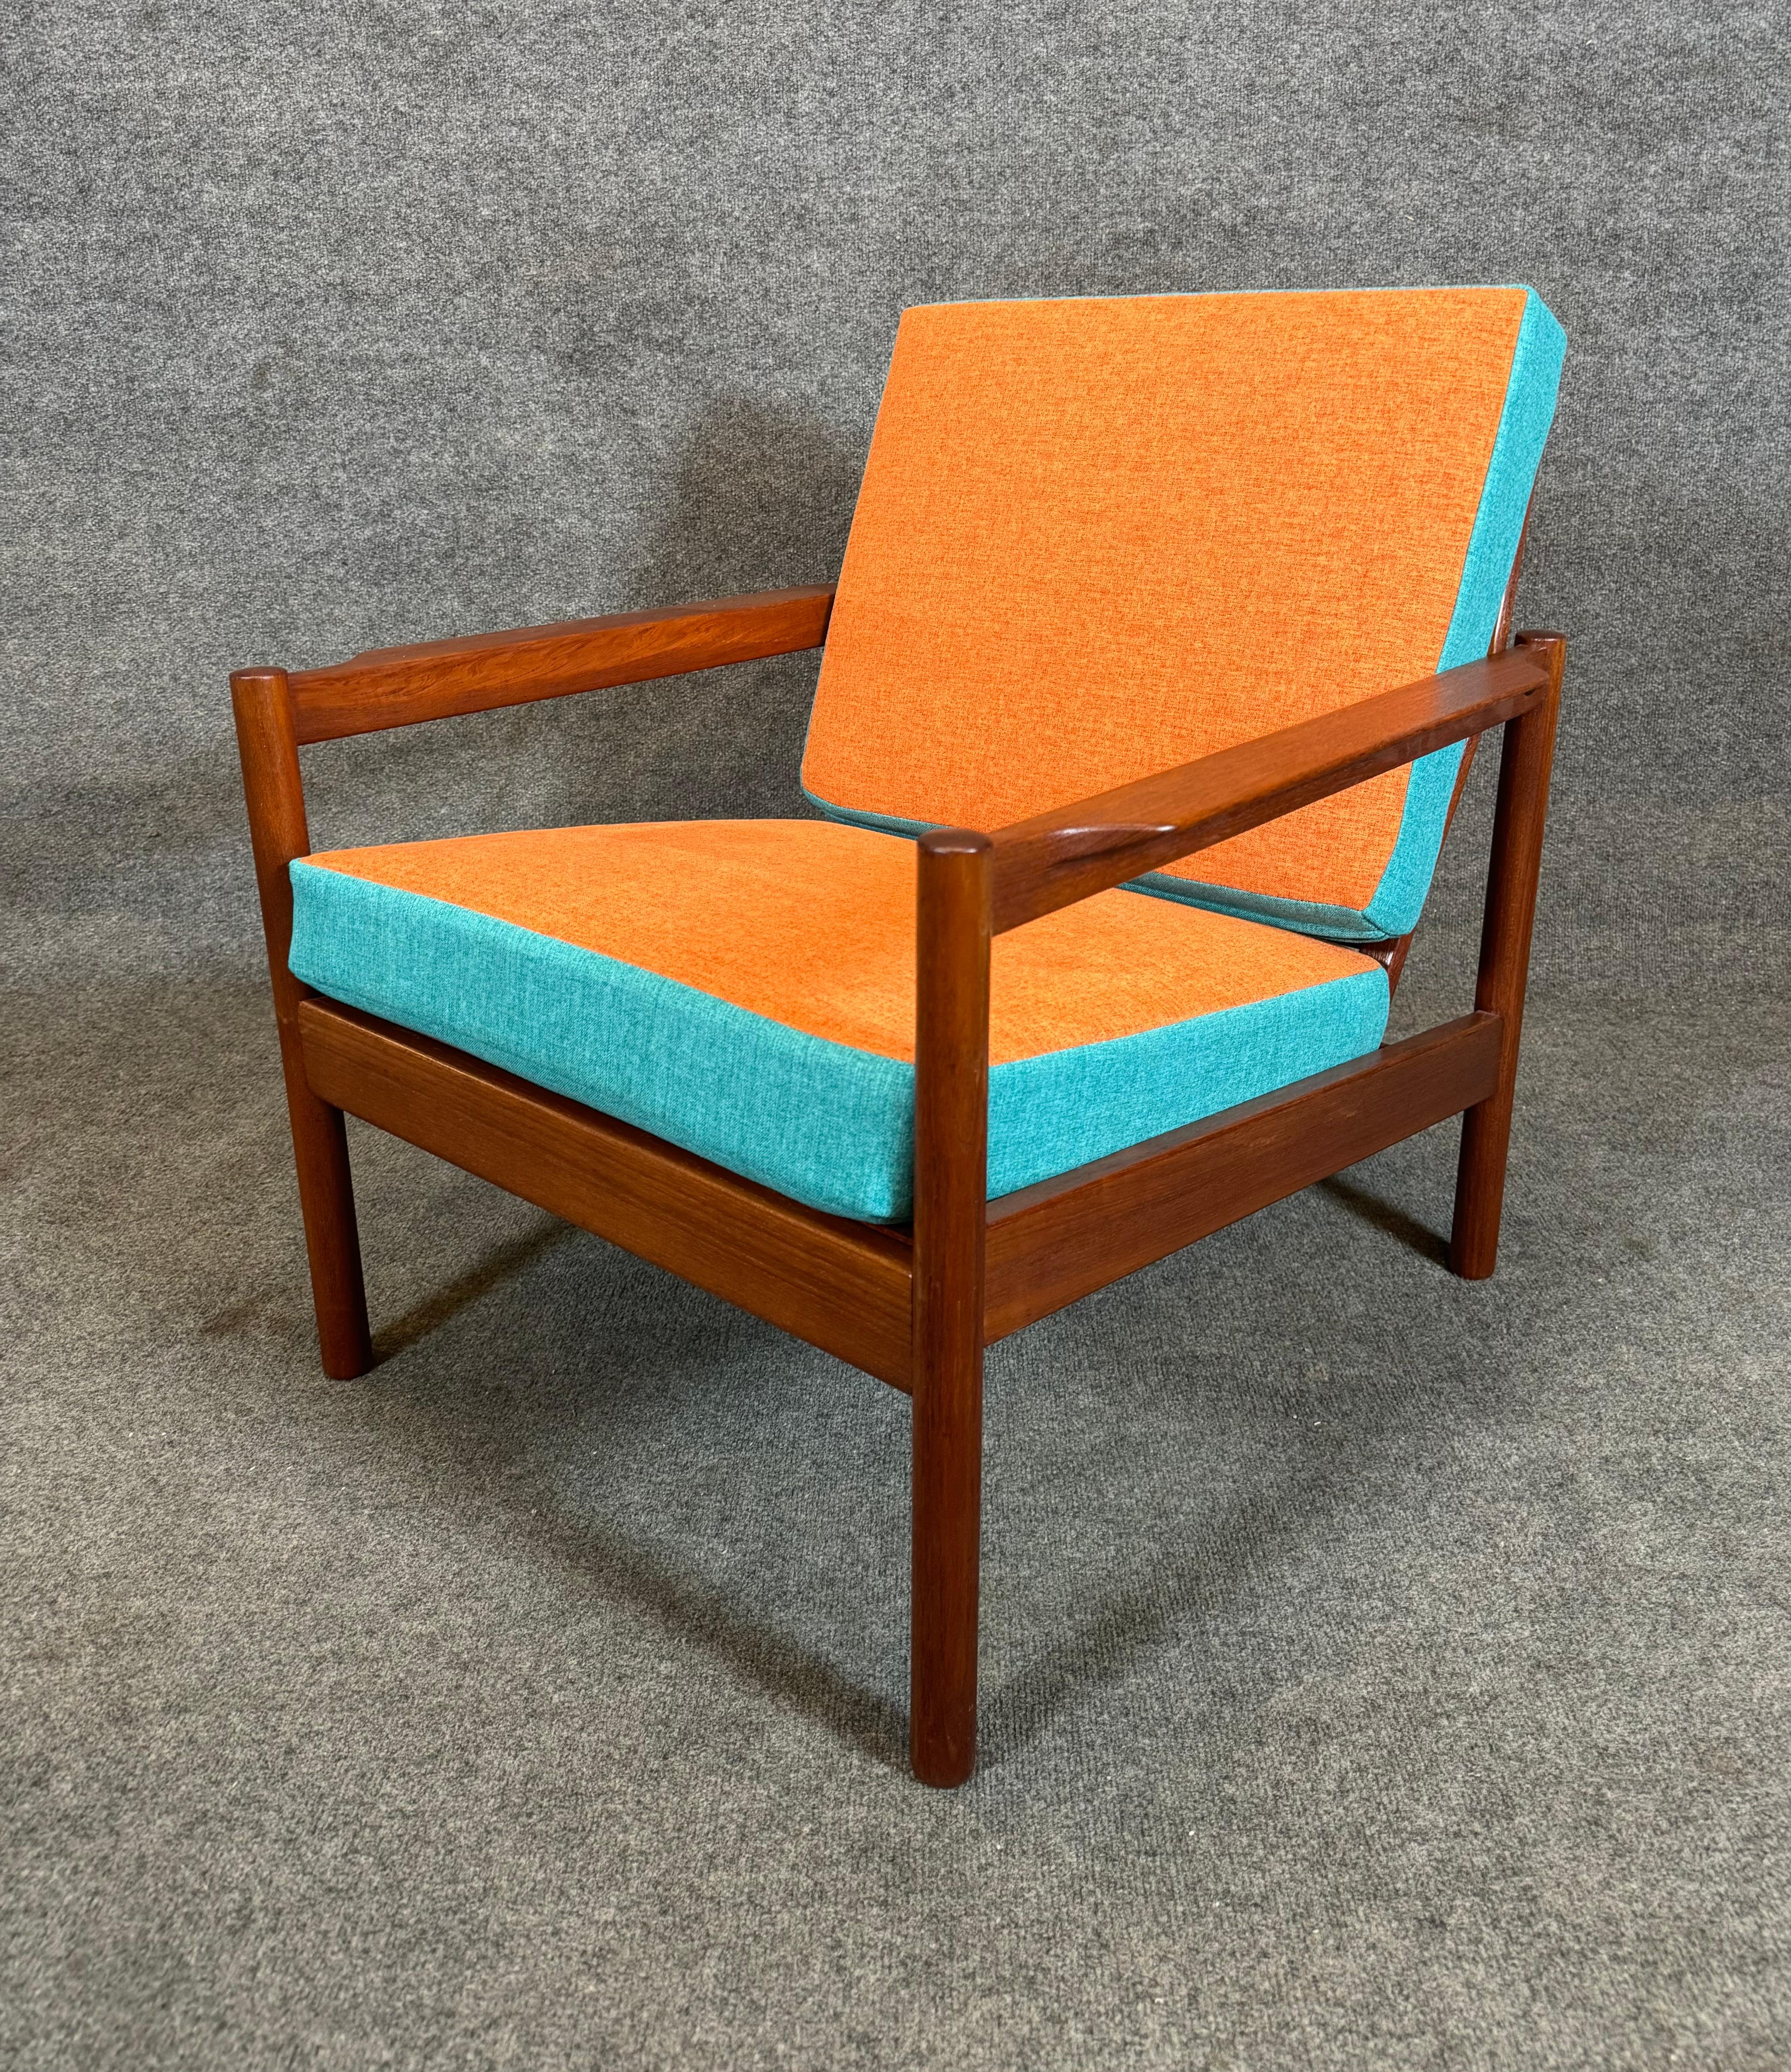 Vintage Danish Mid Century Modern Teak Lounge Chair by Kai Kristiansen In Good Condition For Sale In San Marcos, CA